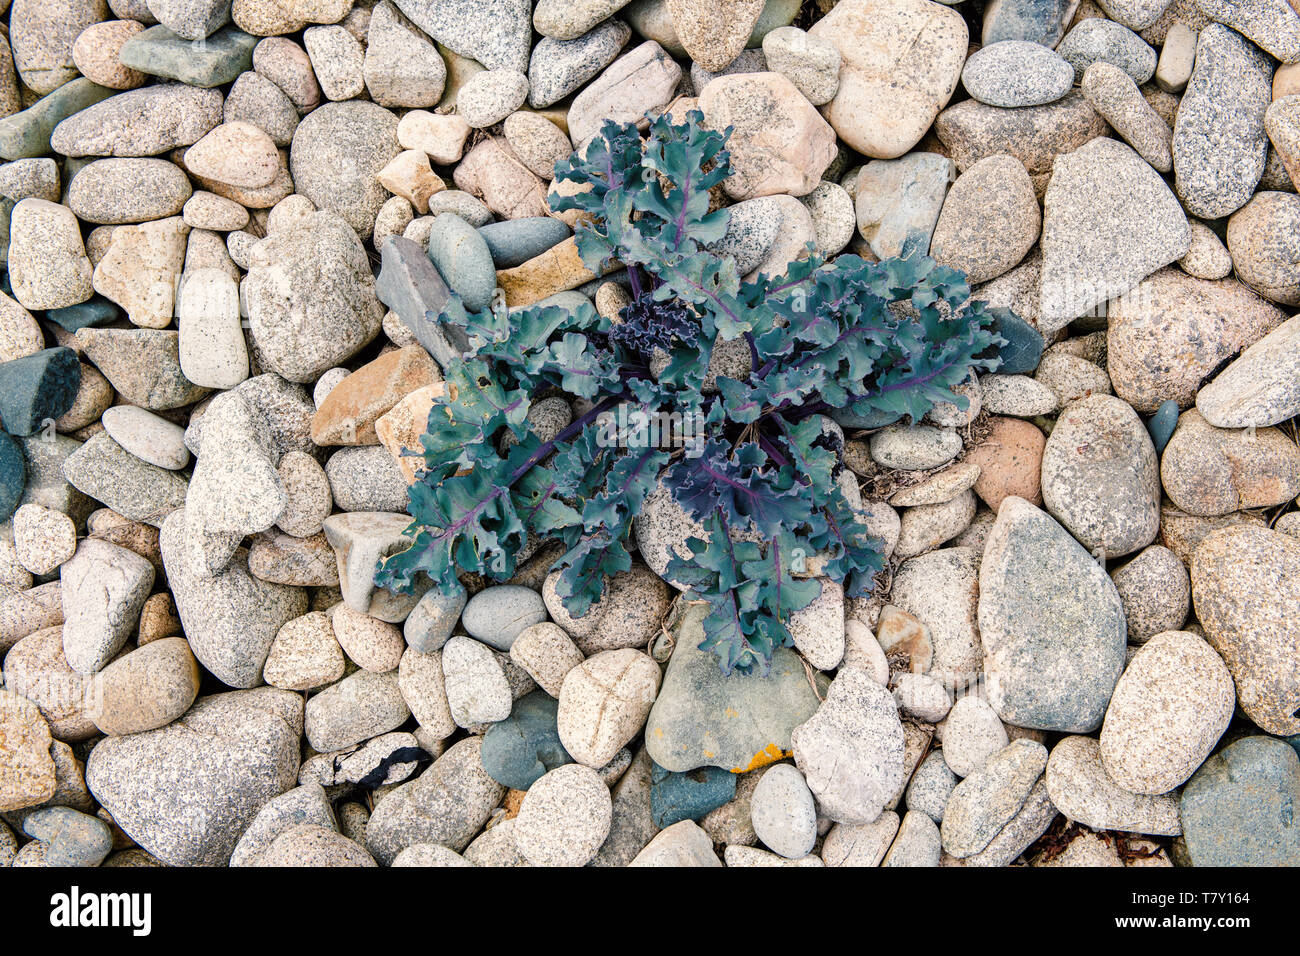 Blue green sea kale grows on a beige pebble beach. Stock Photo